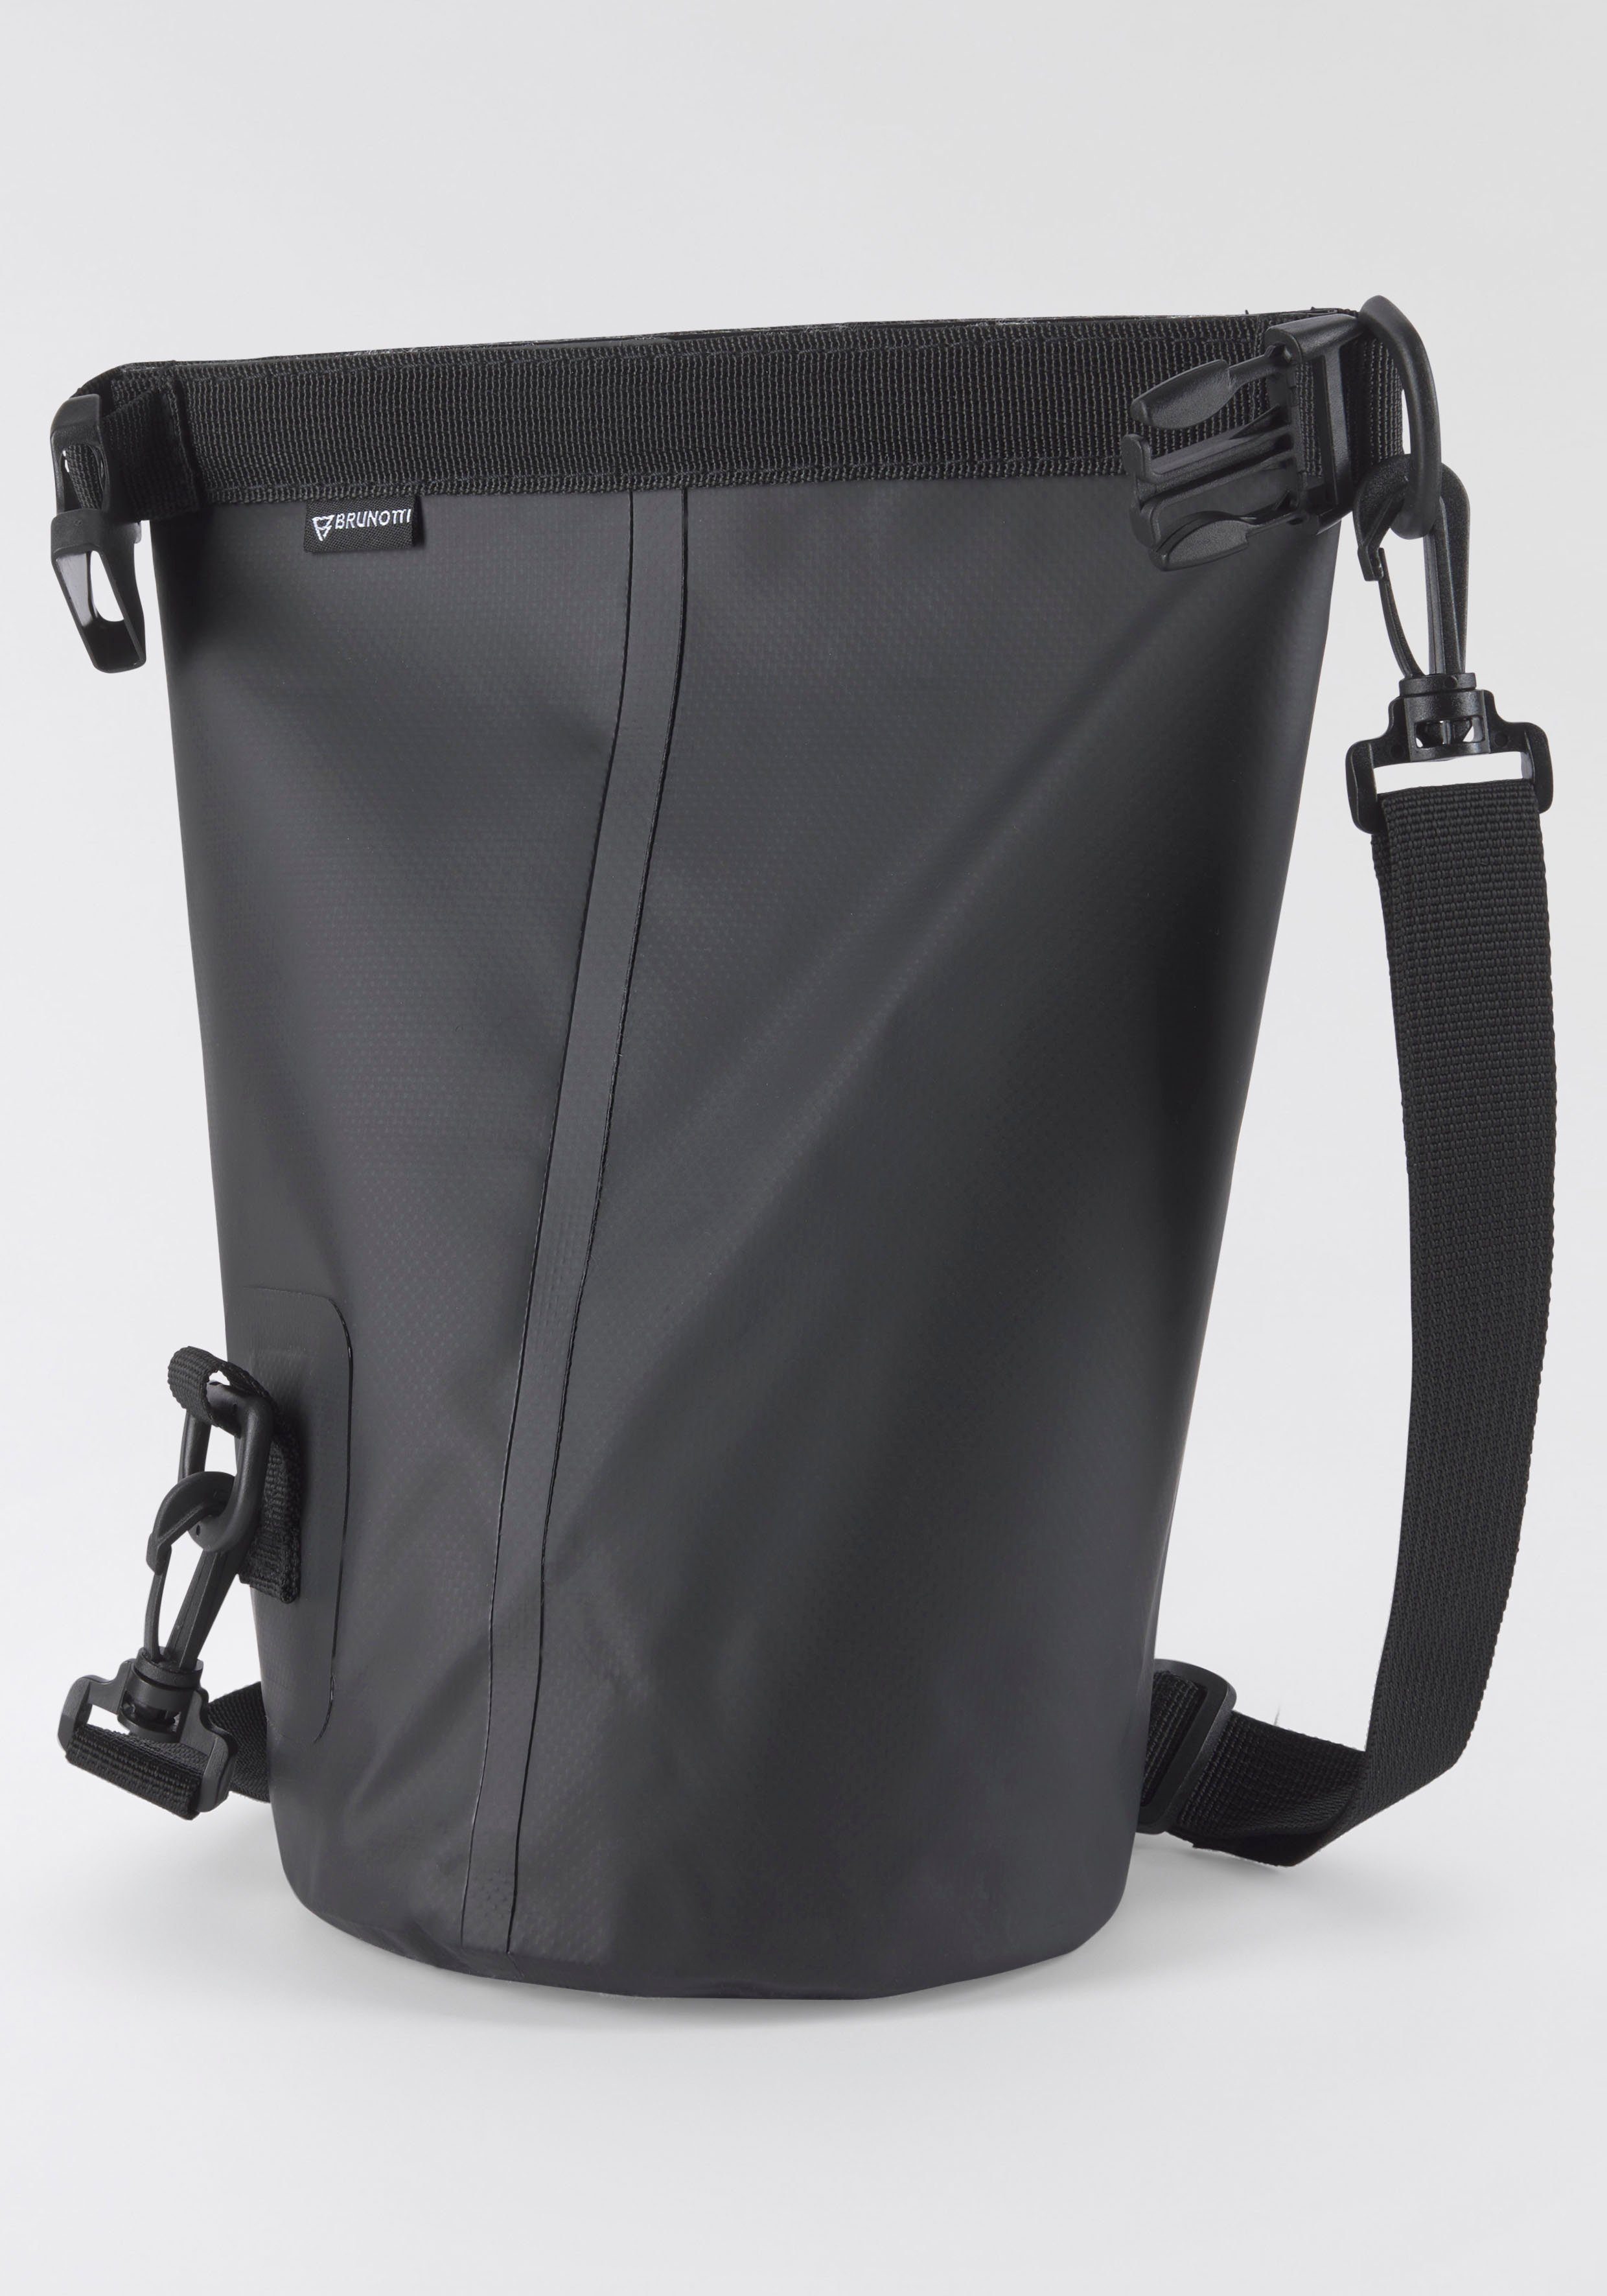 Brunotti Drybag-3L Unisex Bag Sporttasche